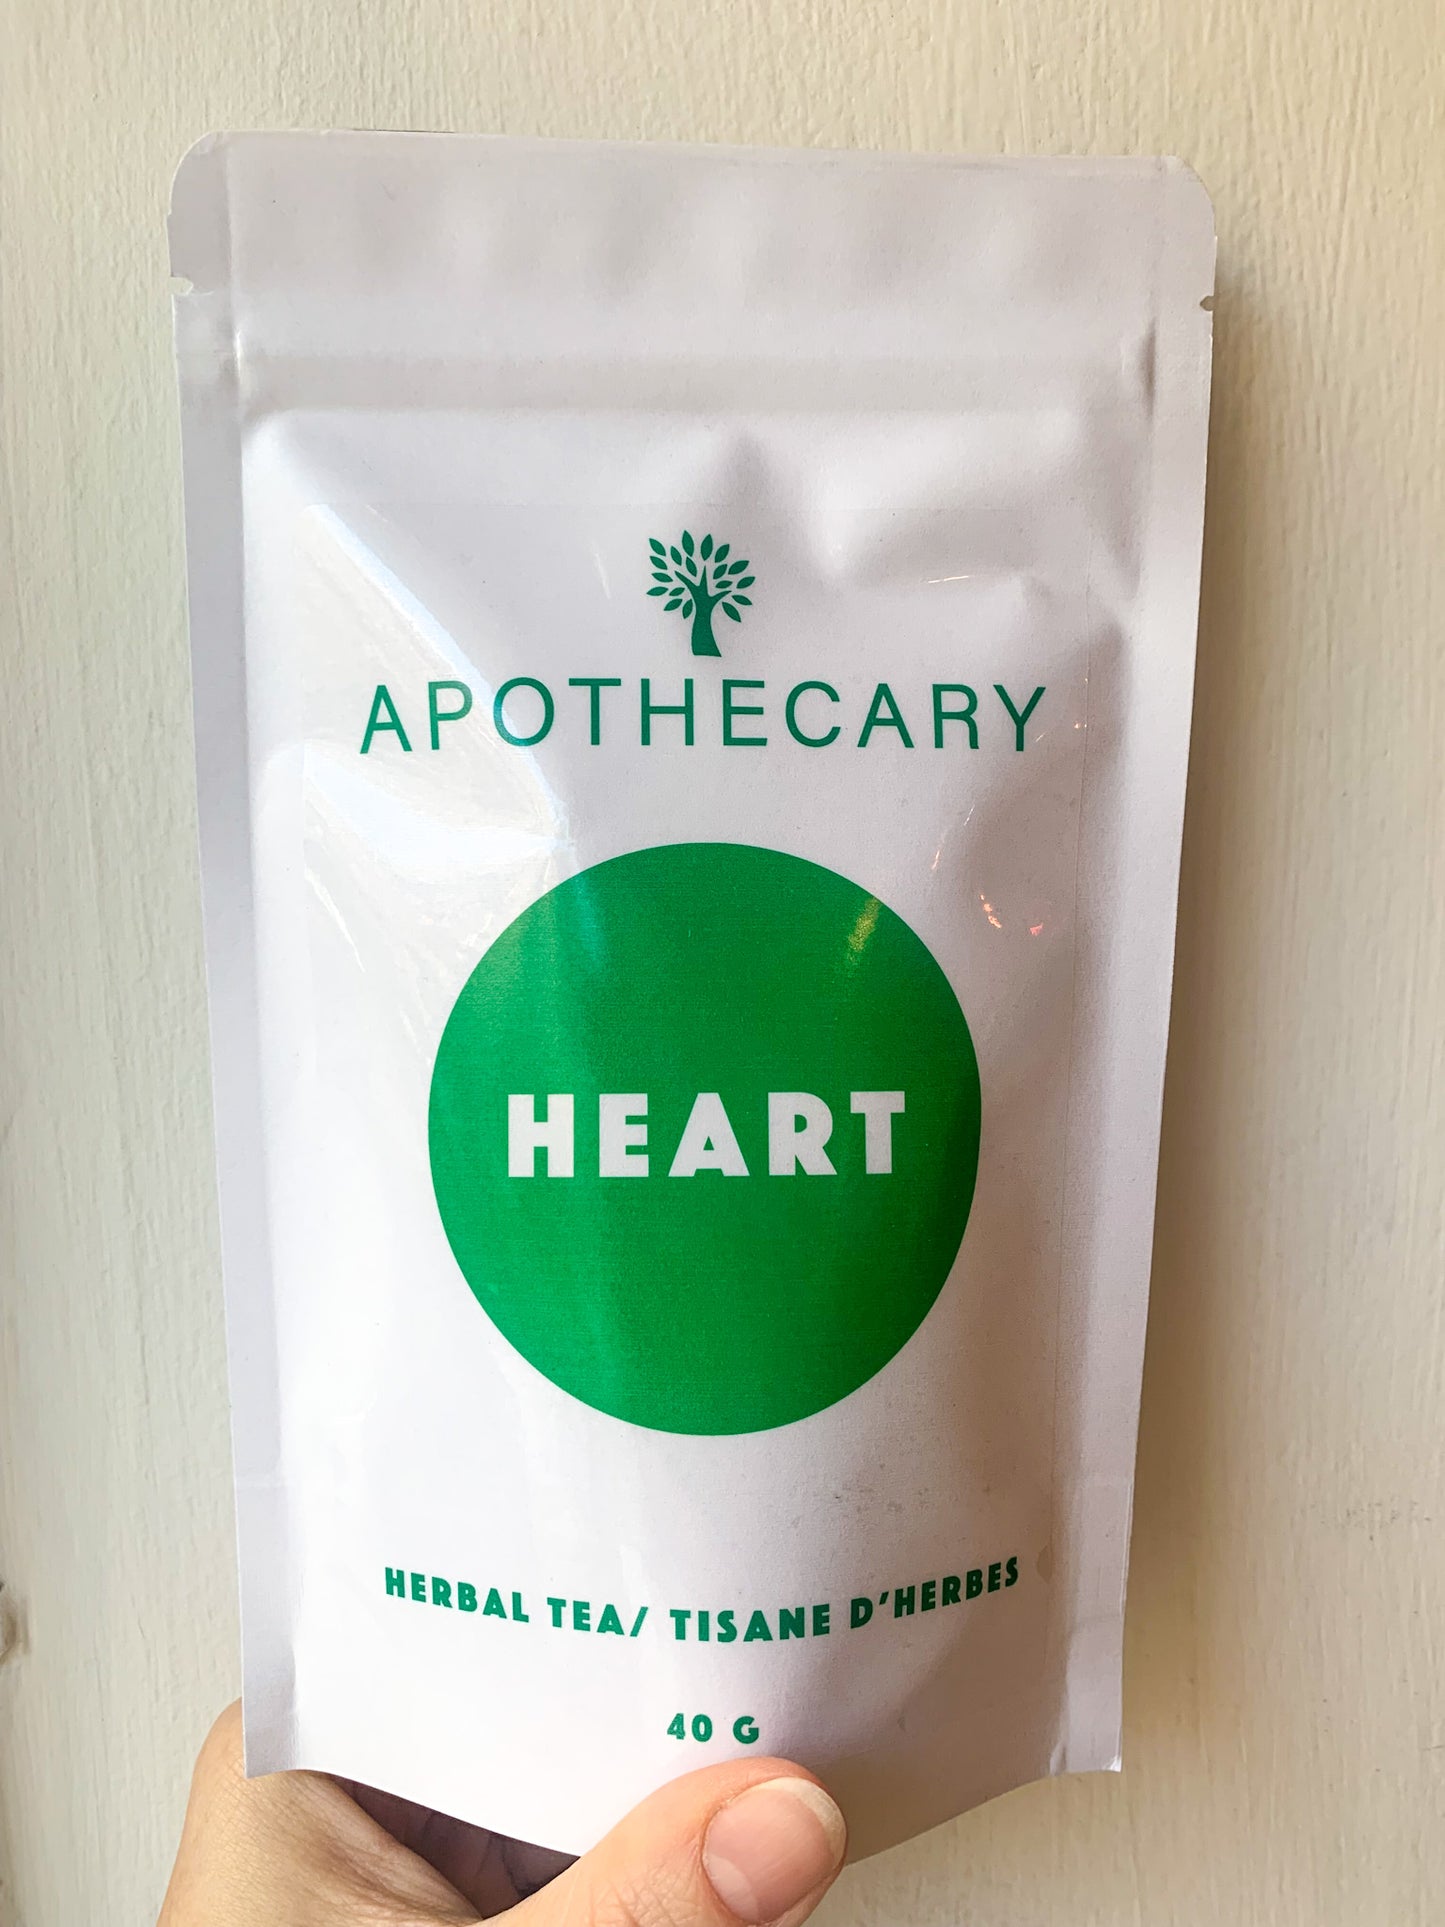 The Apothecary Heart Herbal Tea